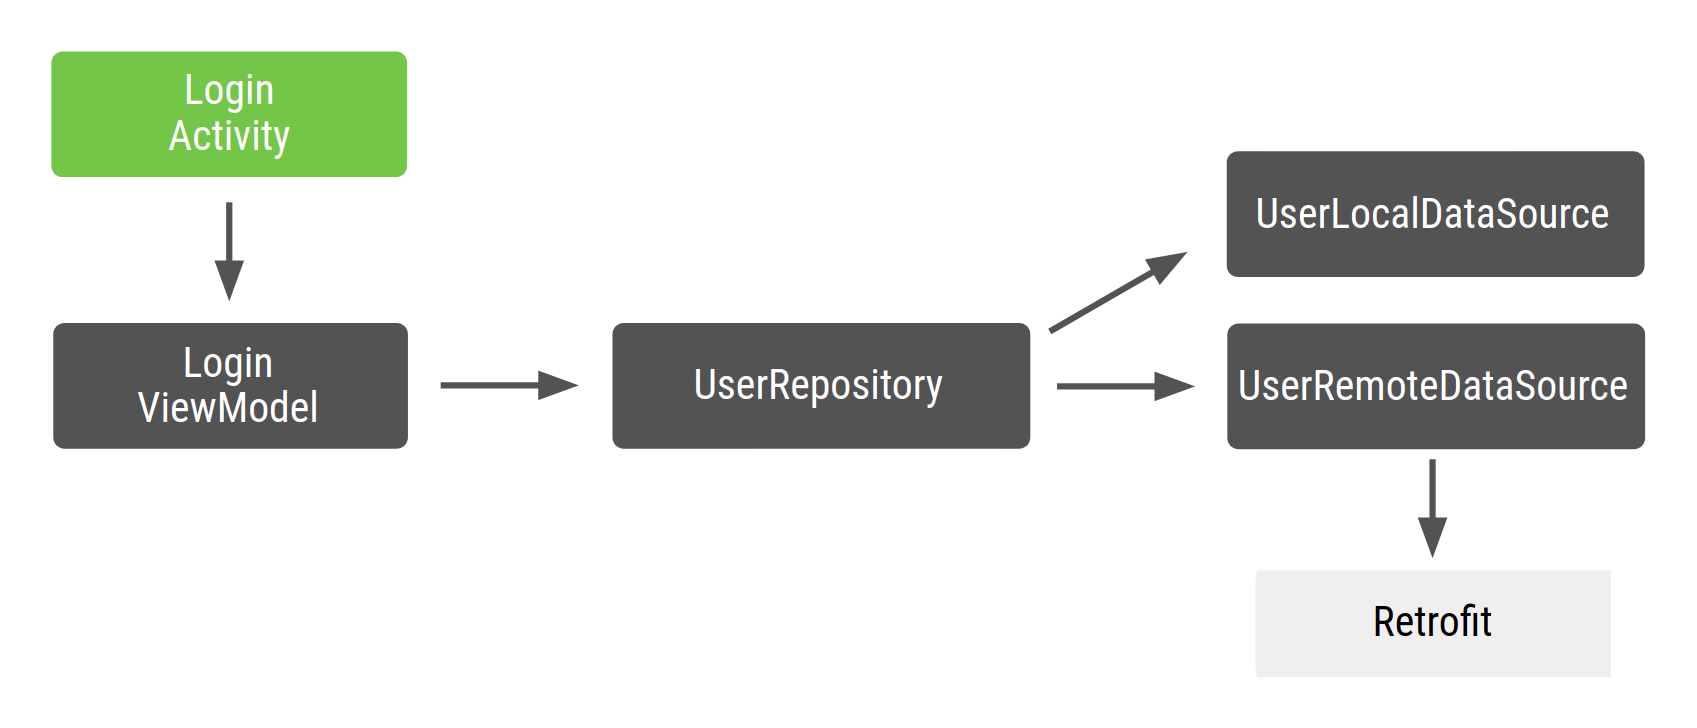 LoginActivity は LoginViewModel に依存。LoginViewModel は UserRepository に依存。UserRepository は UserRocalDataSource と UserRemoteDataSource に依存。さらに UserRemoteDataSource は Retrofit に依存。